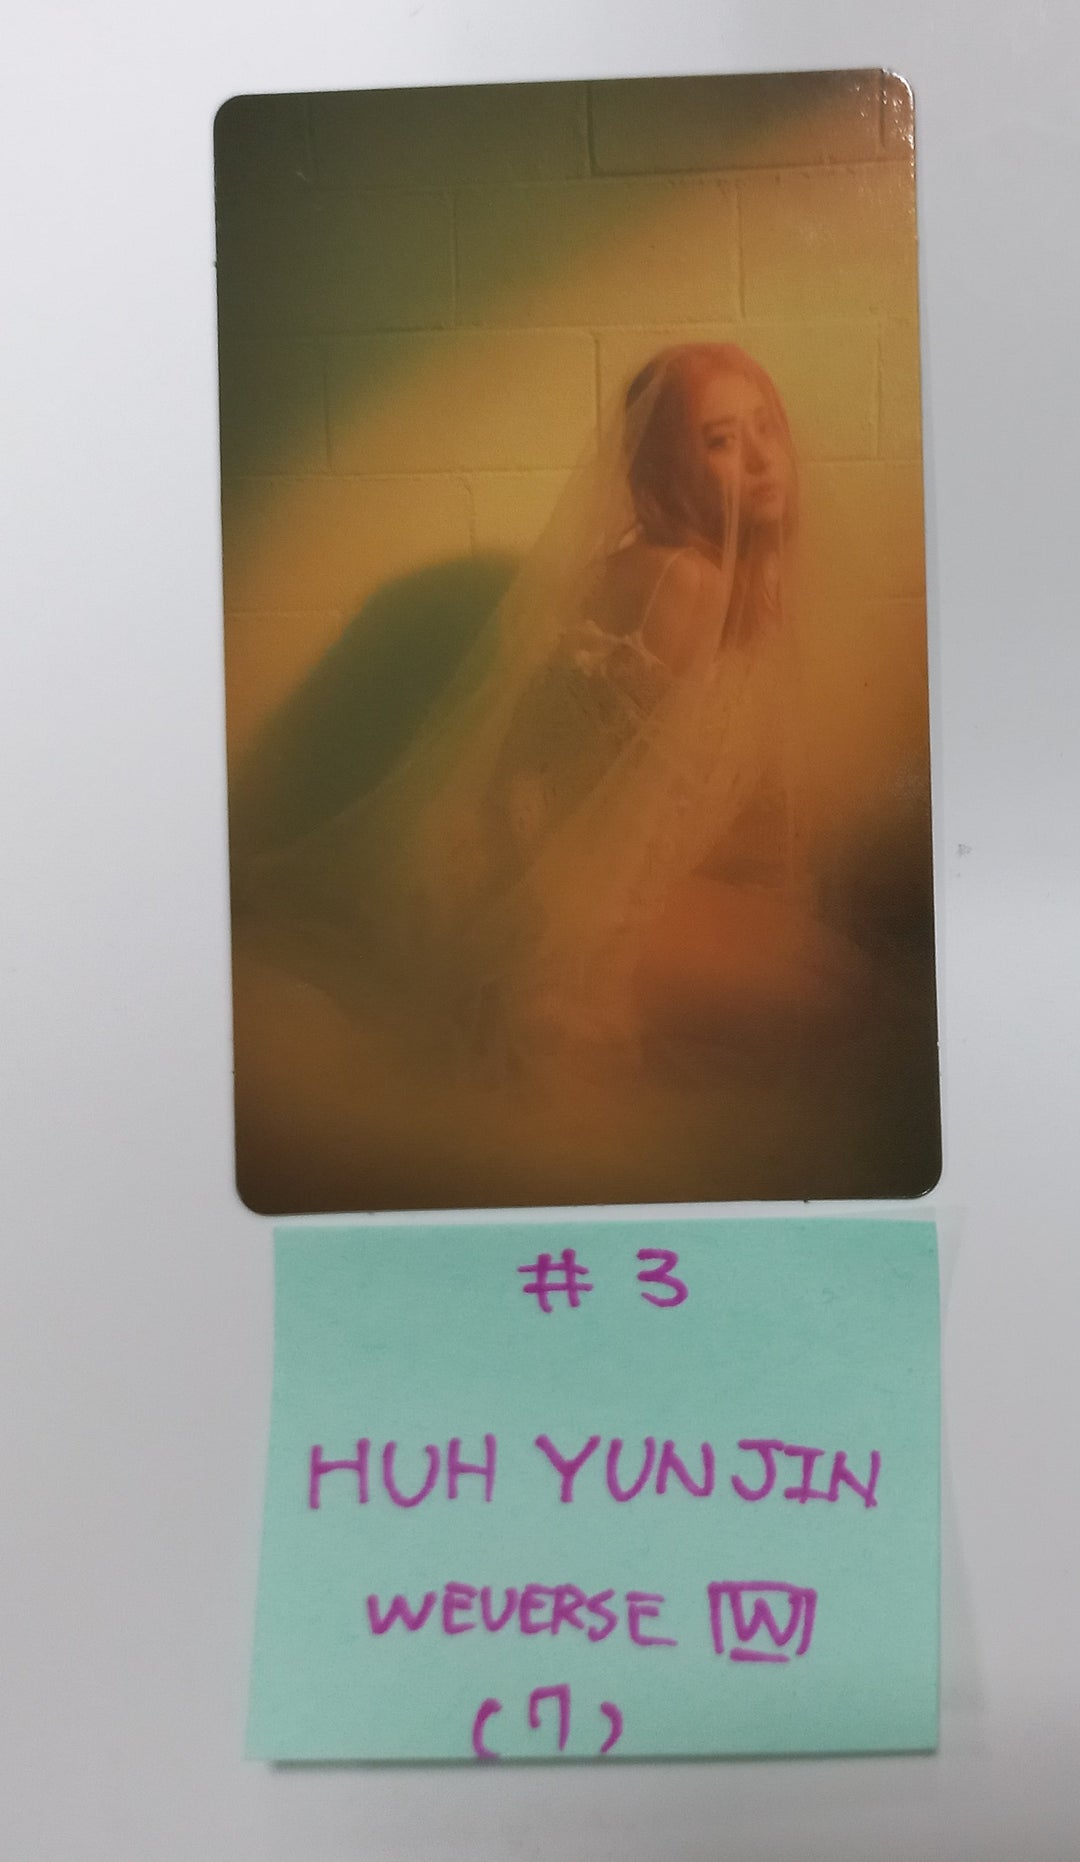 Le Sserafim 3rd Mini "EASY" - Weverse Shop Pre-Order Benefit Photocard [Wever Album Ver.] [24.02.23]